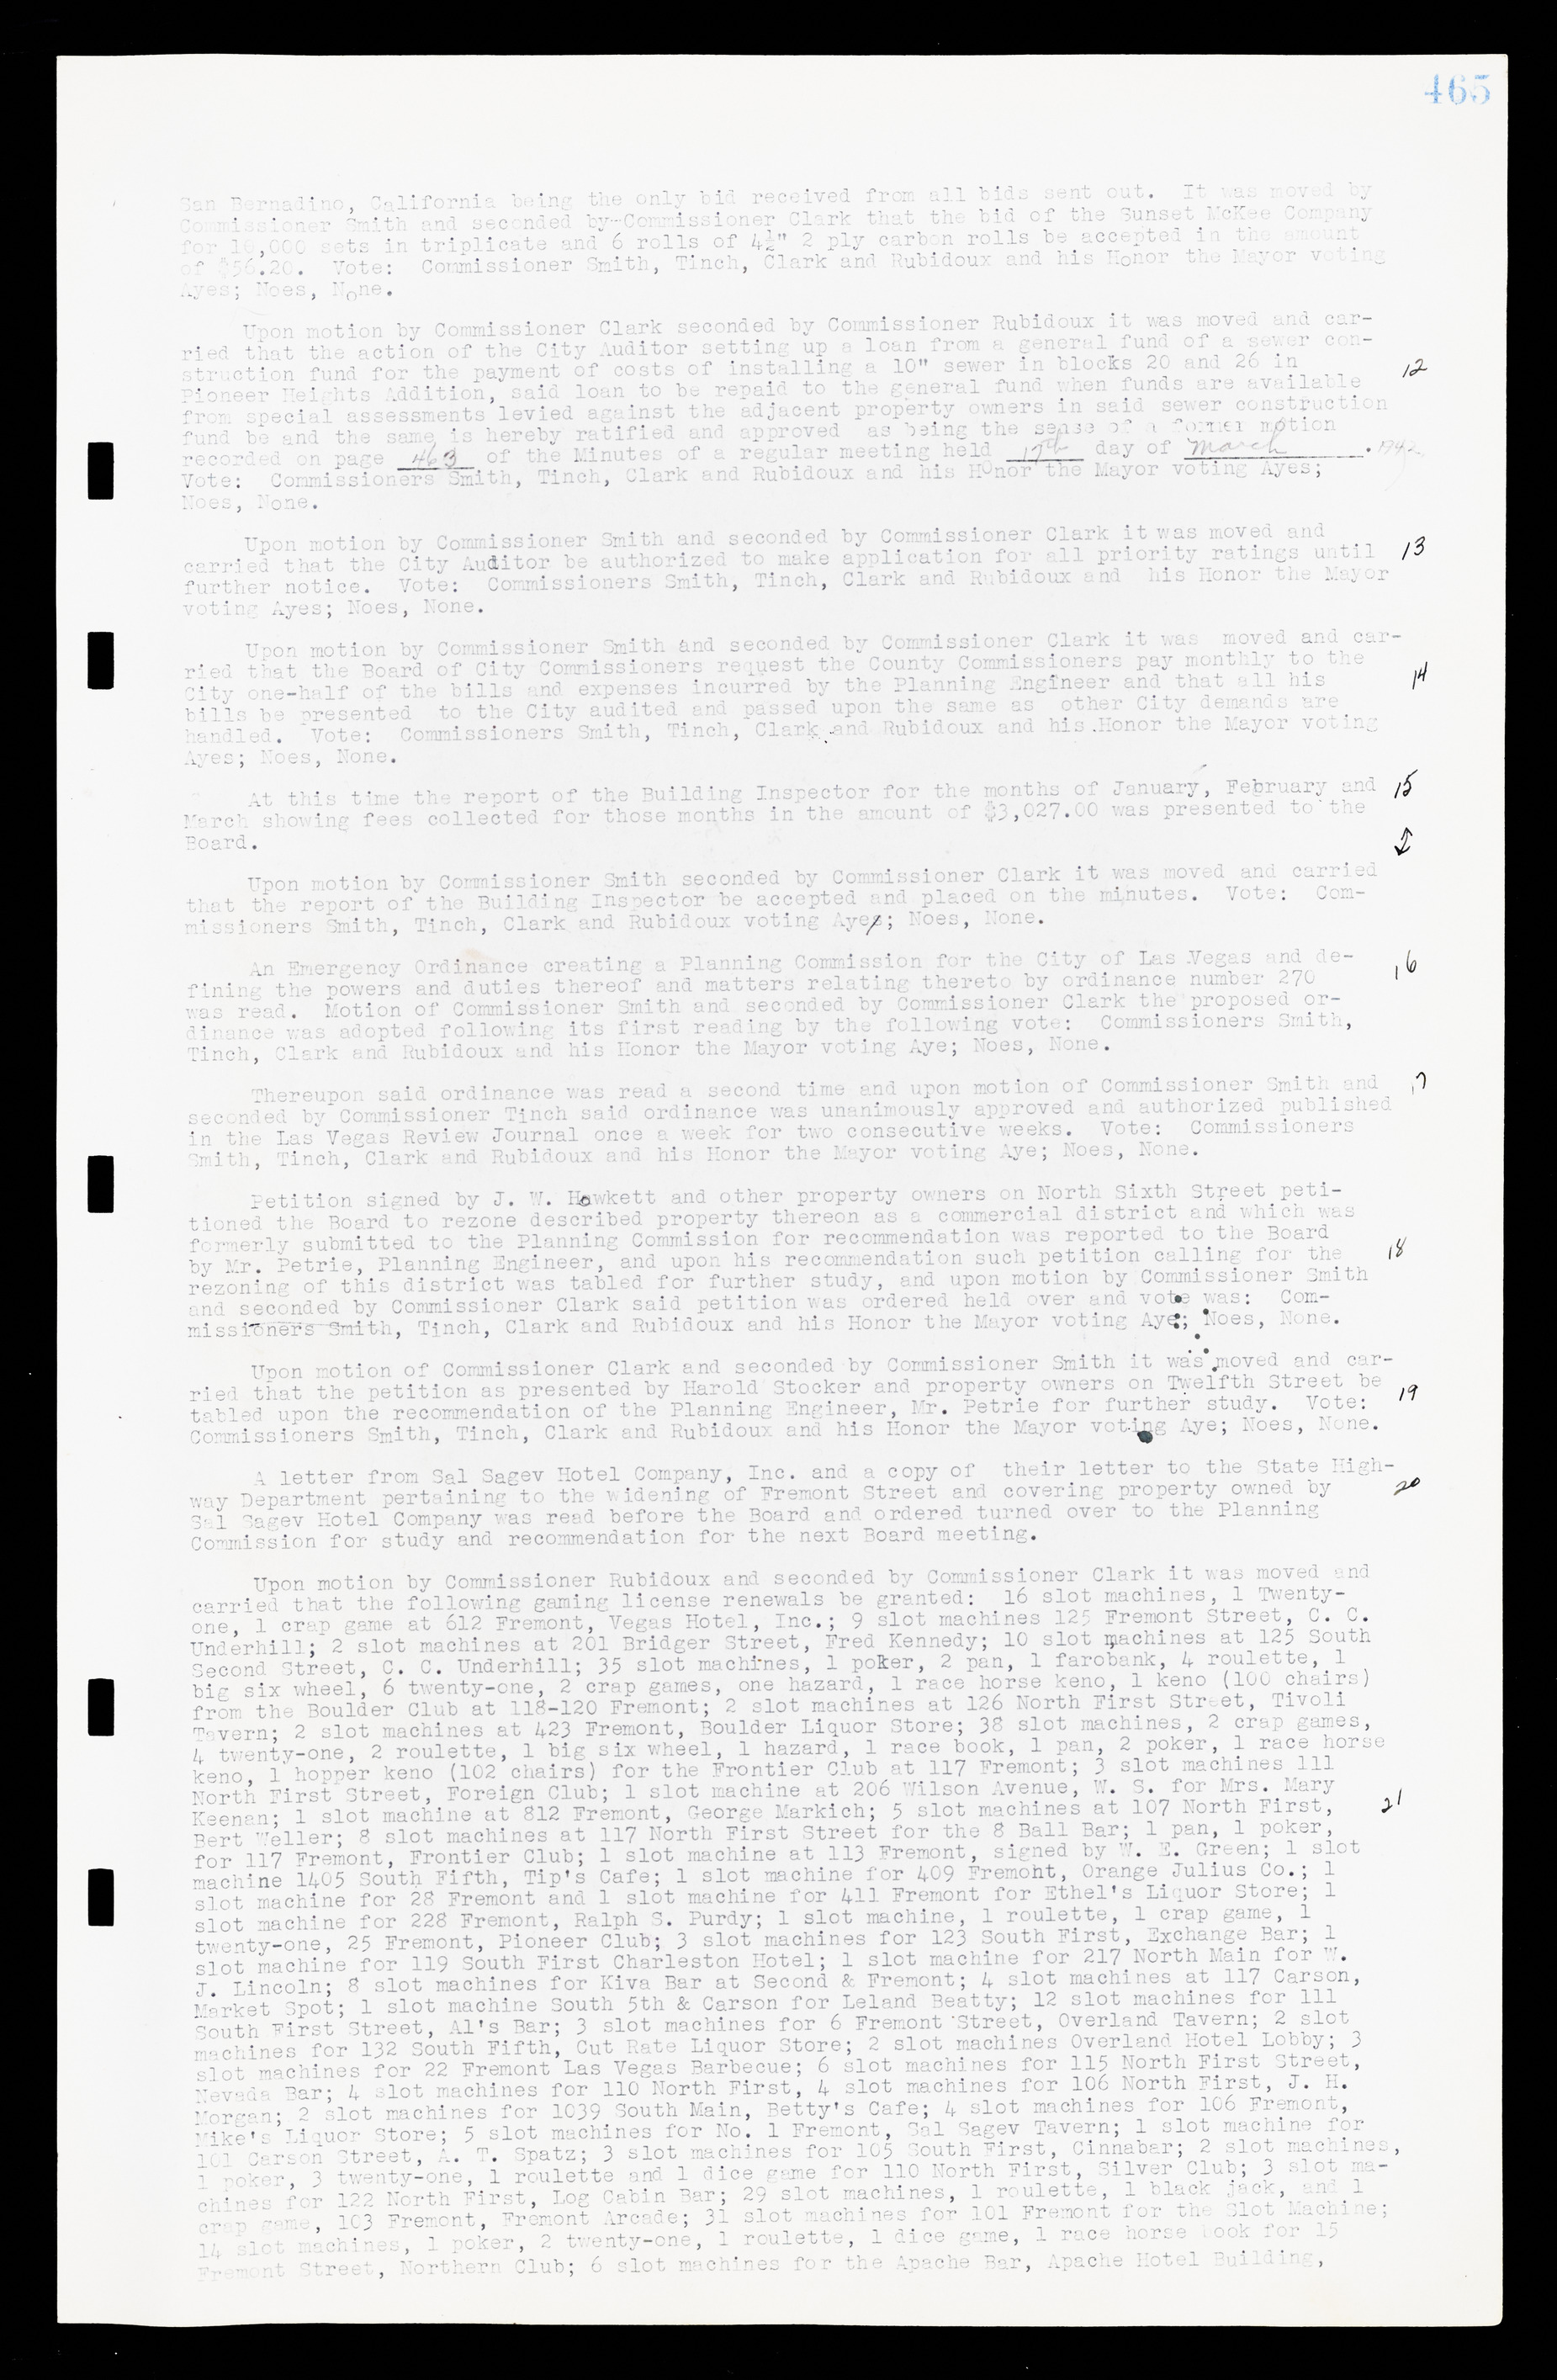 Las Vegas City Commission Minutes, February 17, 1937 to August 4, 1942, lvc000004-493